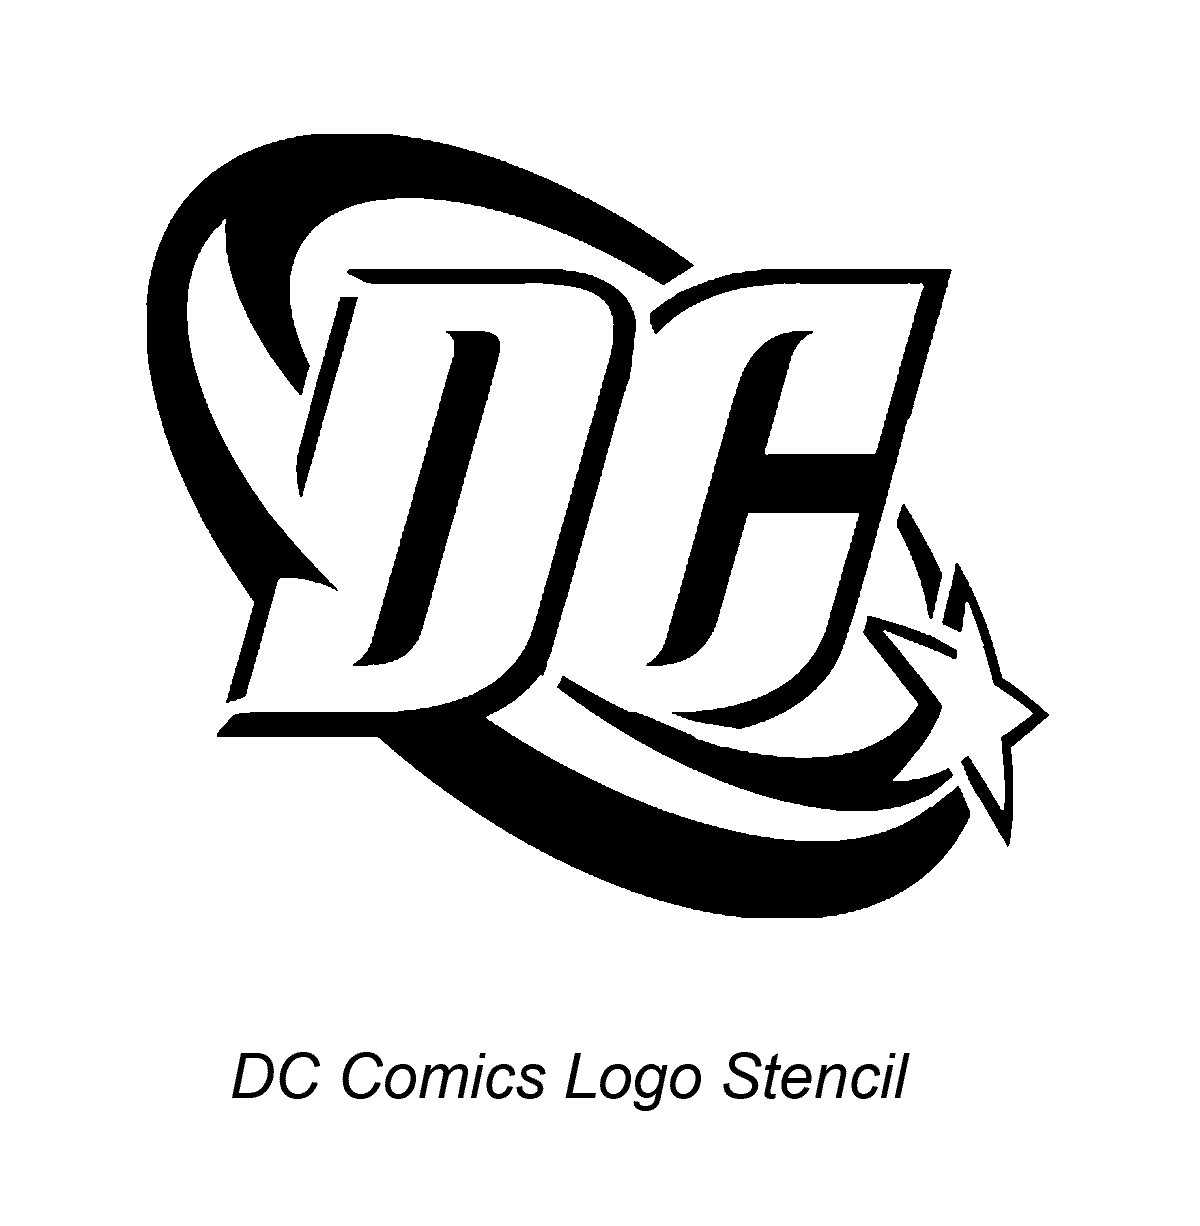 Black and White DC Comics Logo - dc-comics-logo-image.gif 1 200×1 226 pixels | Design | DC Comics ...